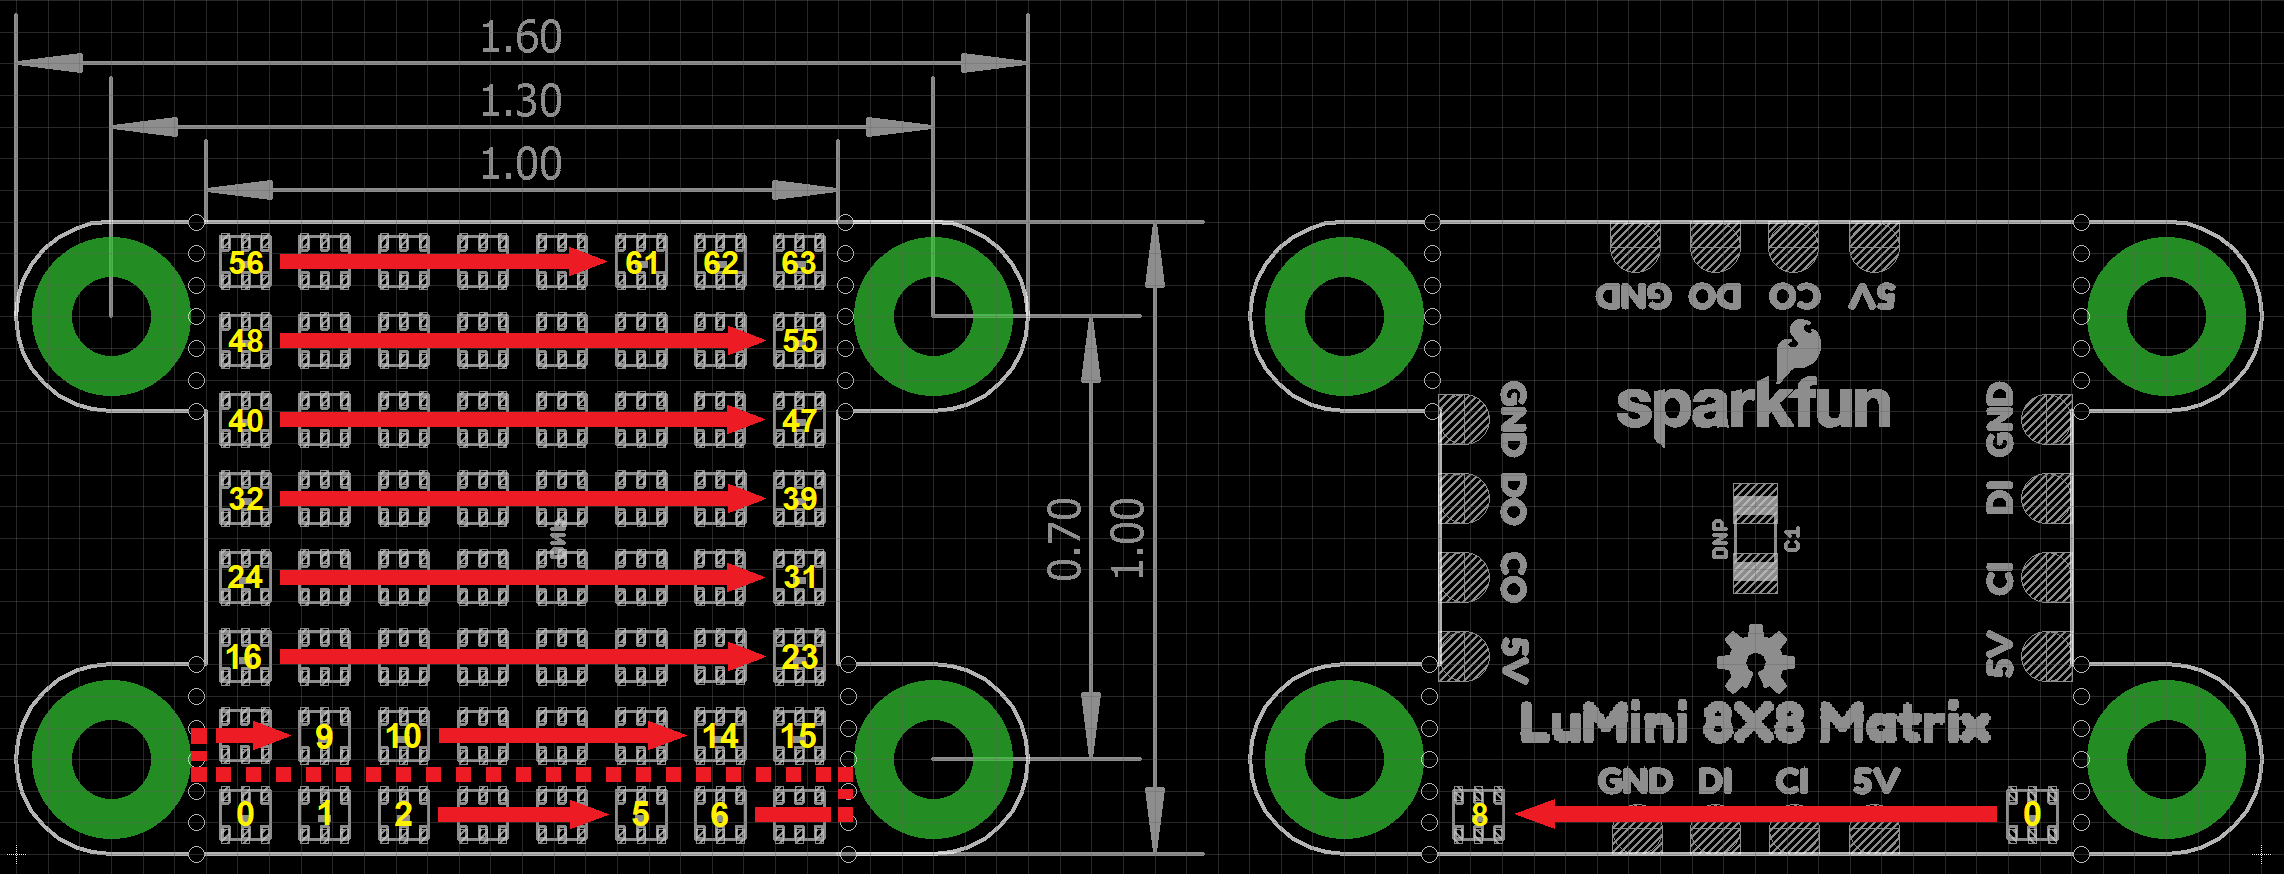 SparkFun LED Matrix - Serial Interface - Red/Green/Blue - COM-00760 -  SparkFun Electronics